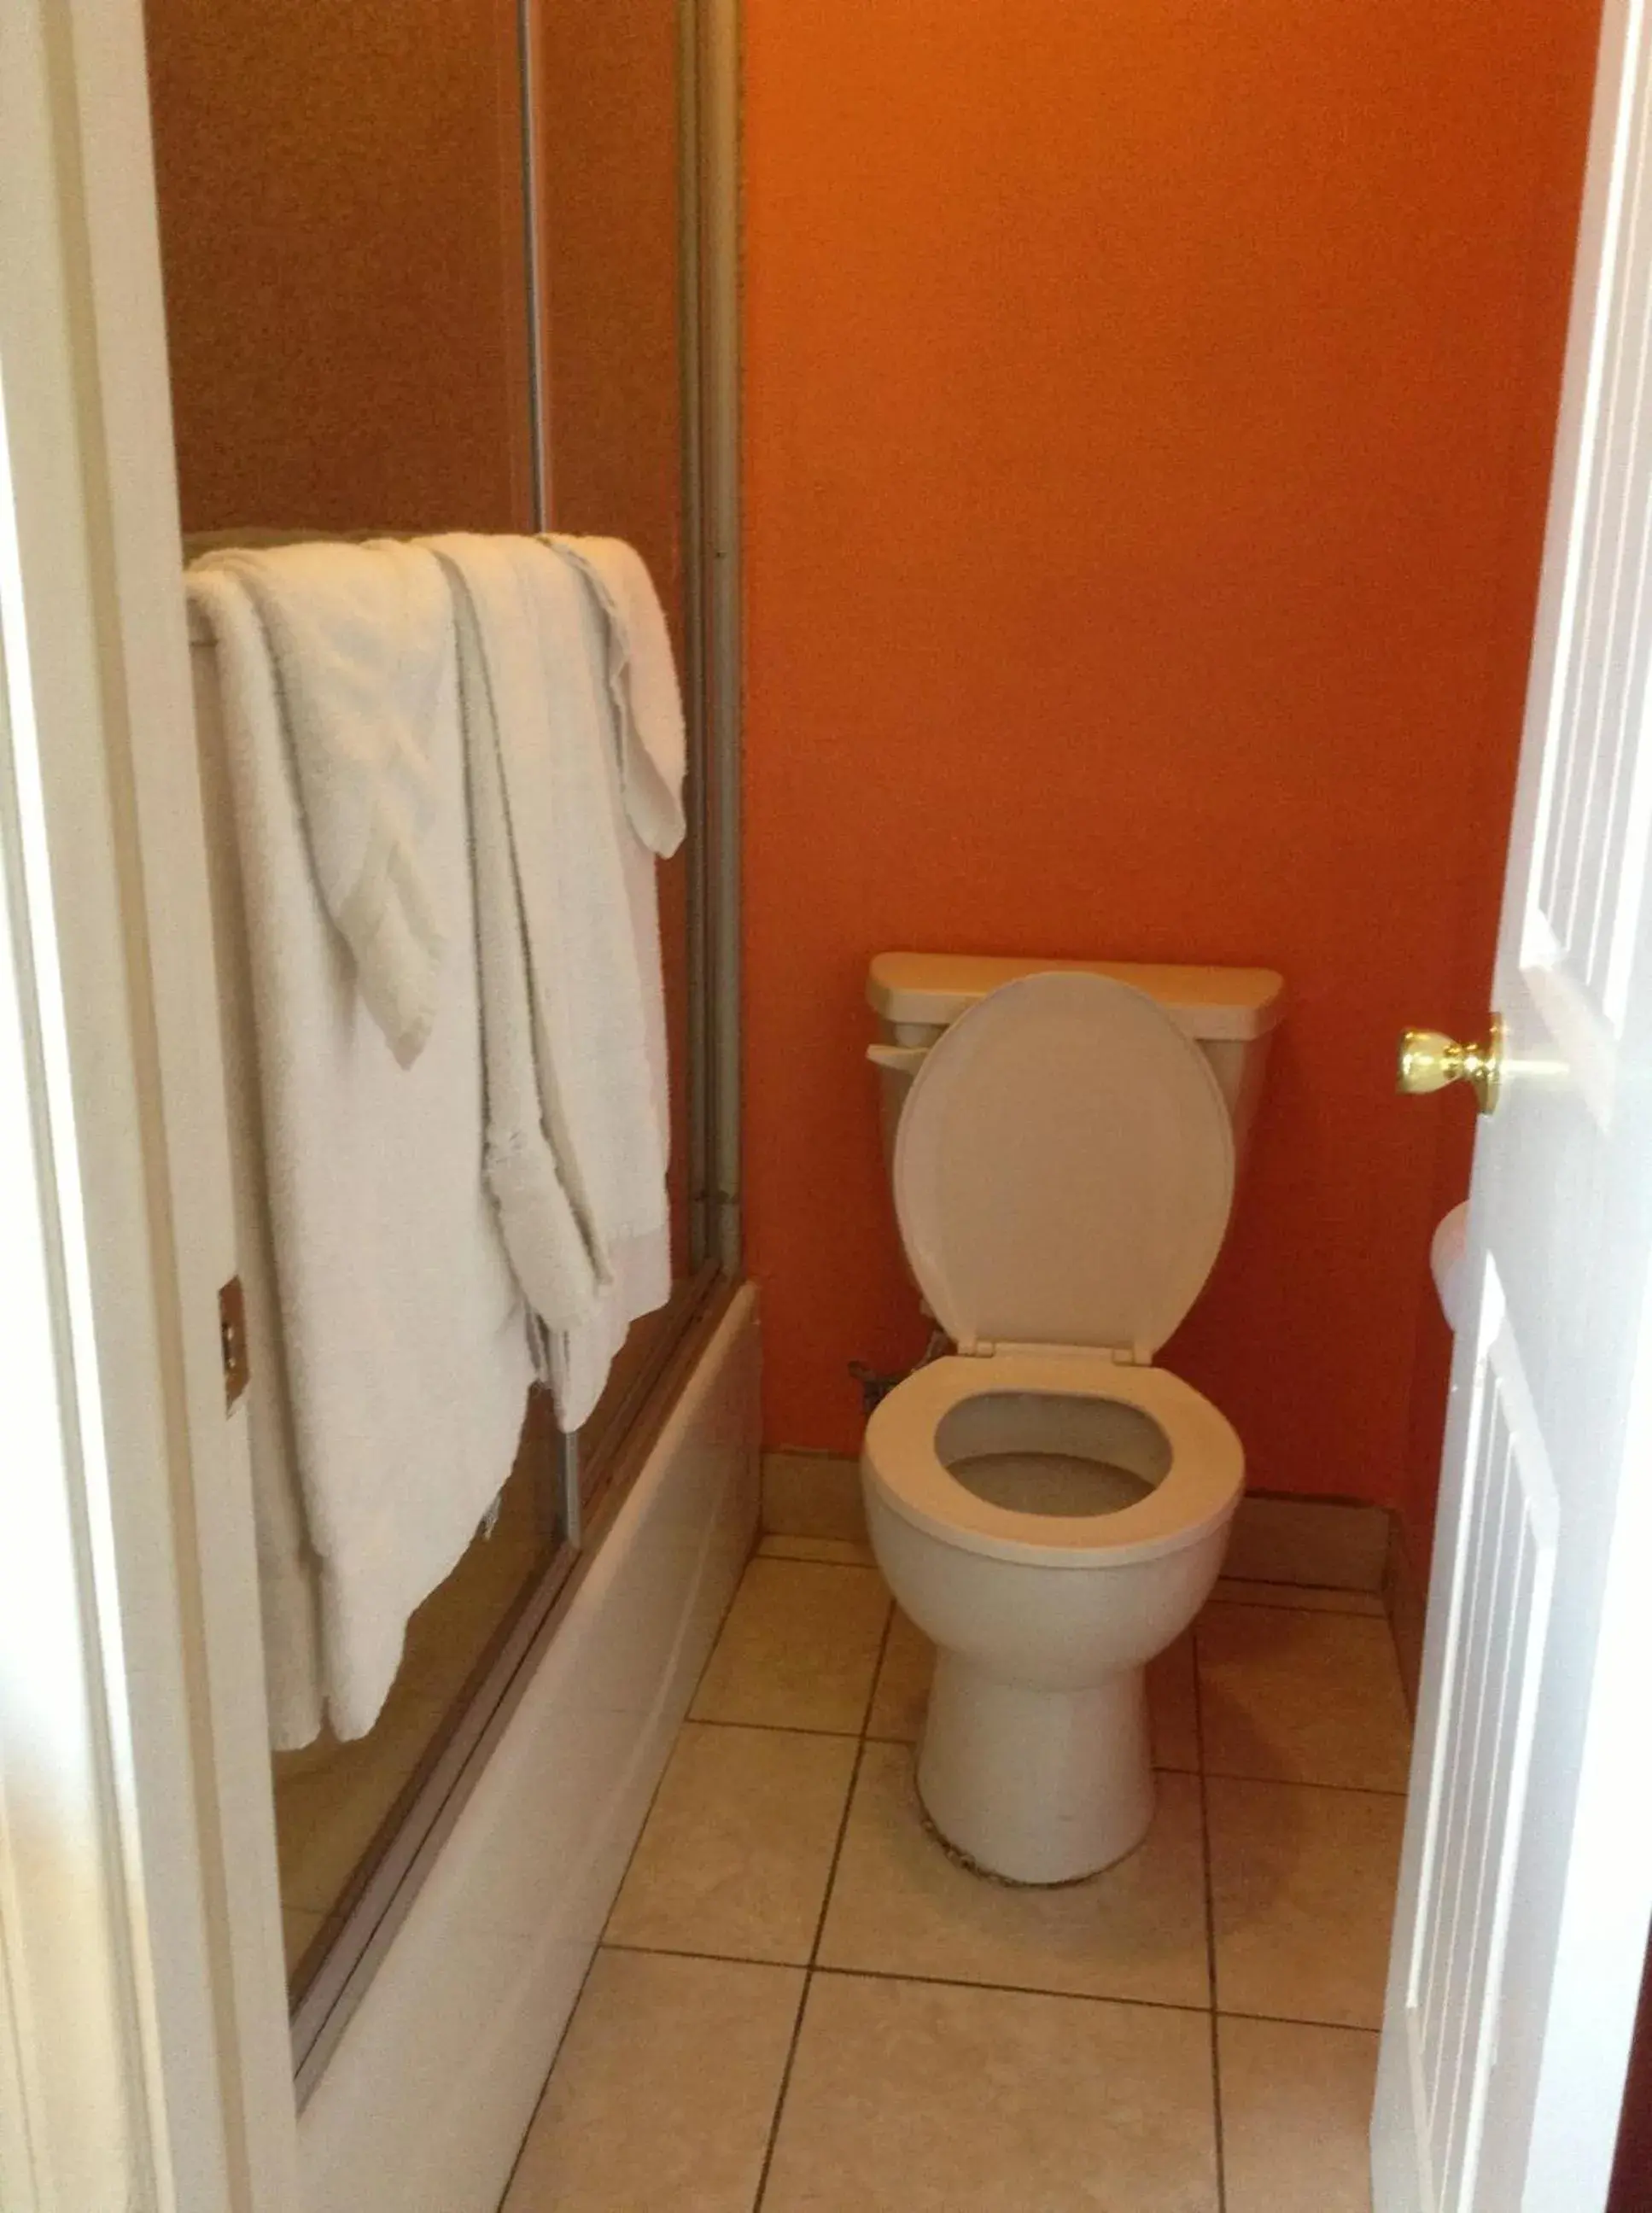 Bathroom in Coast Motel